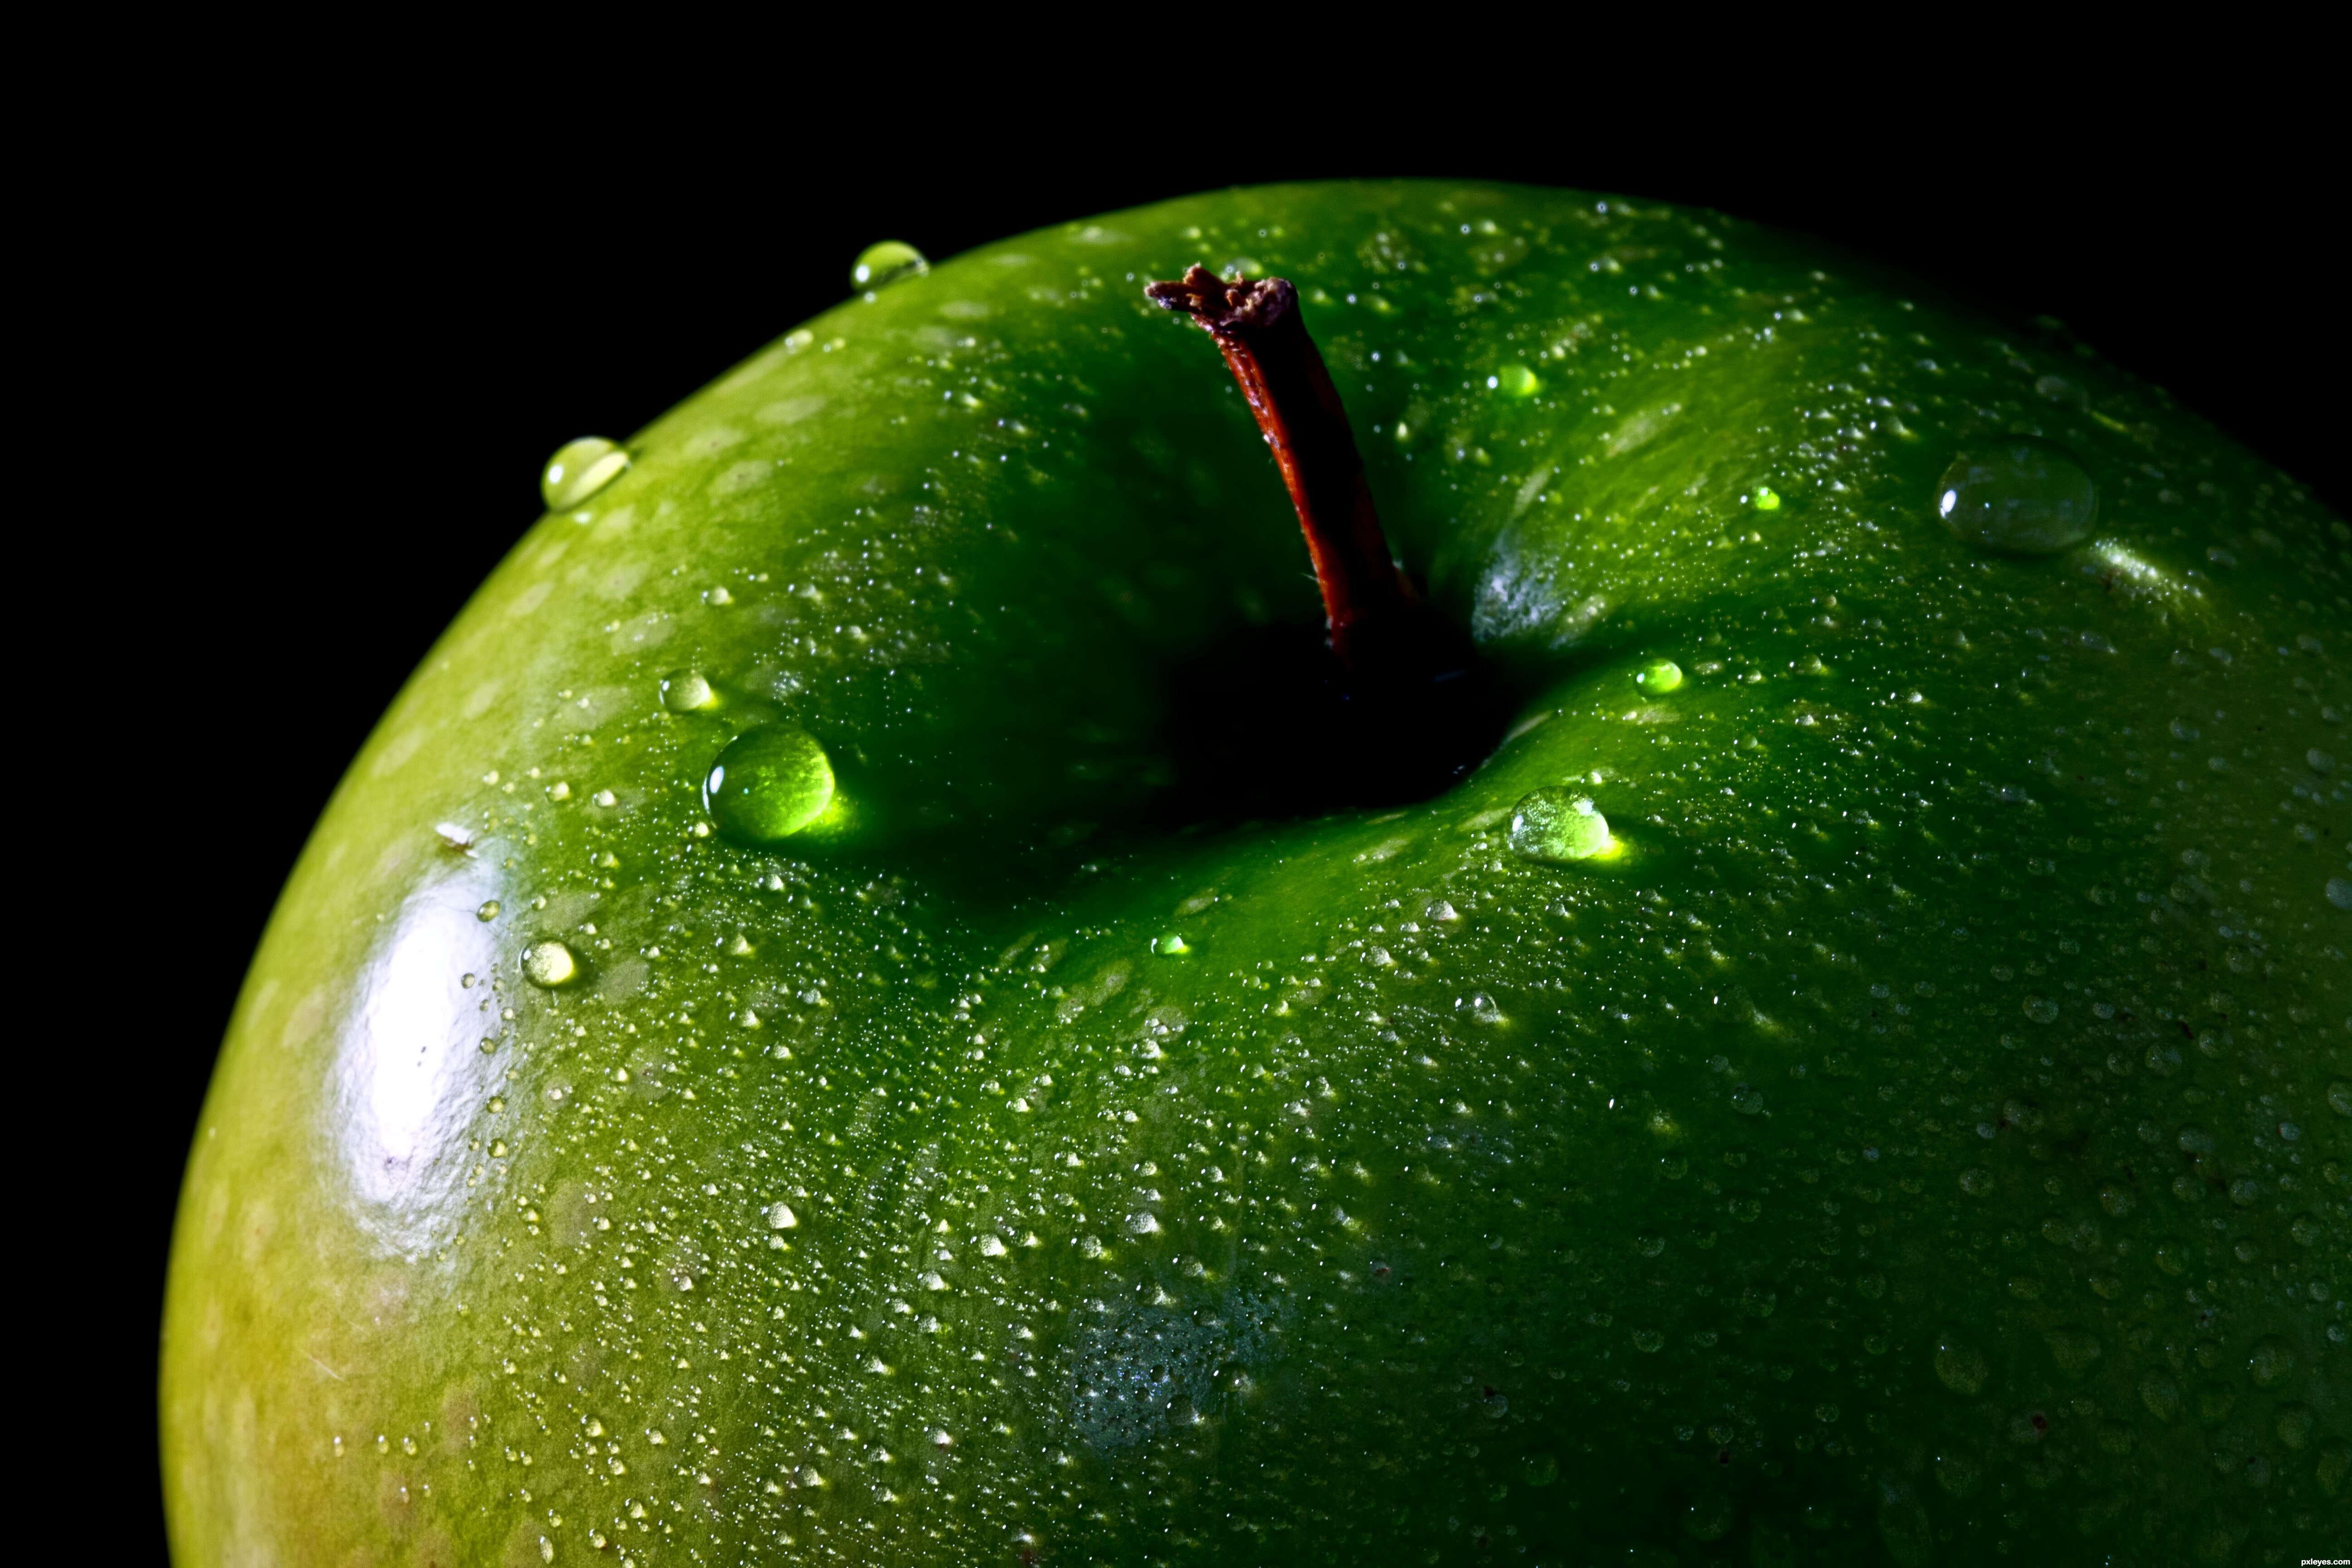 Wet green apple photo